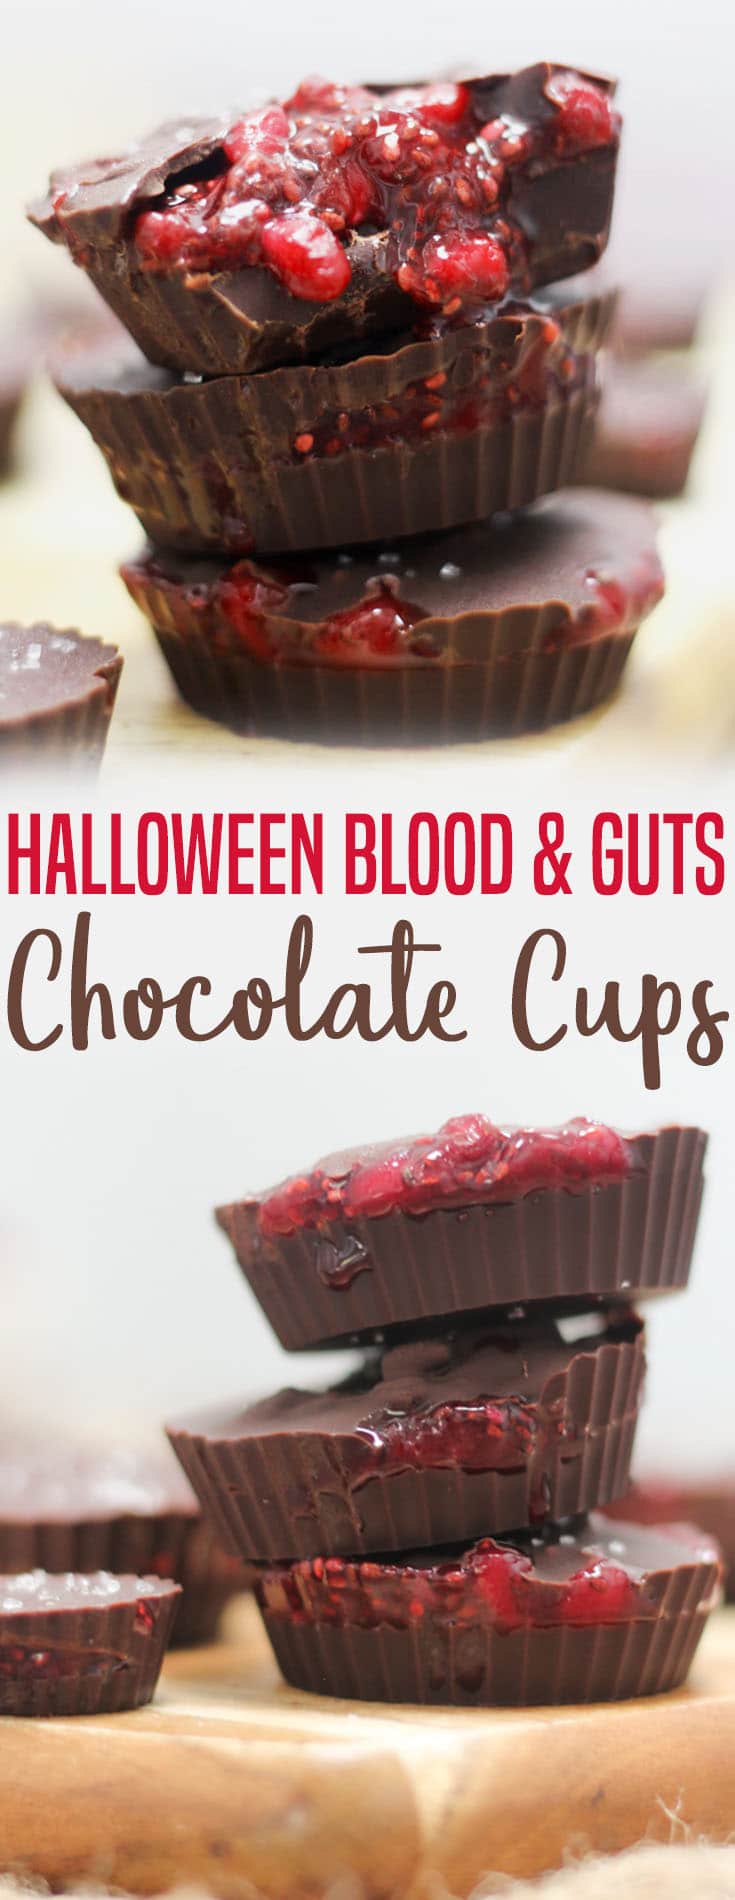 Halloween Blood and Guts Chocolate Cups | Vegan and Gluten Free Dessert ...